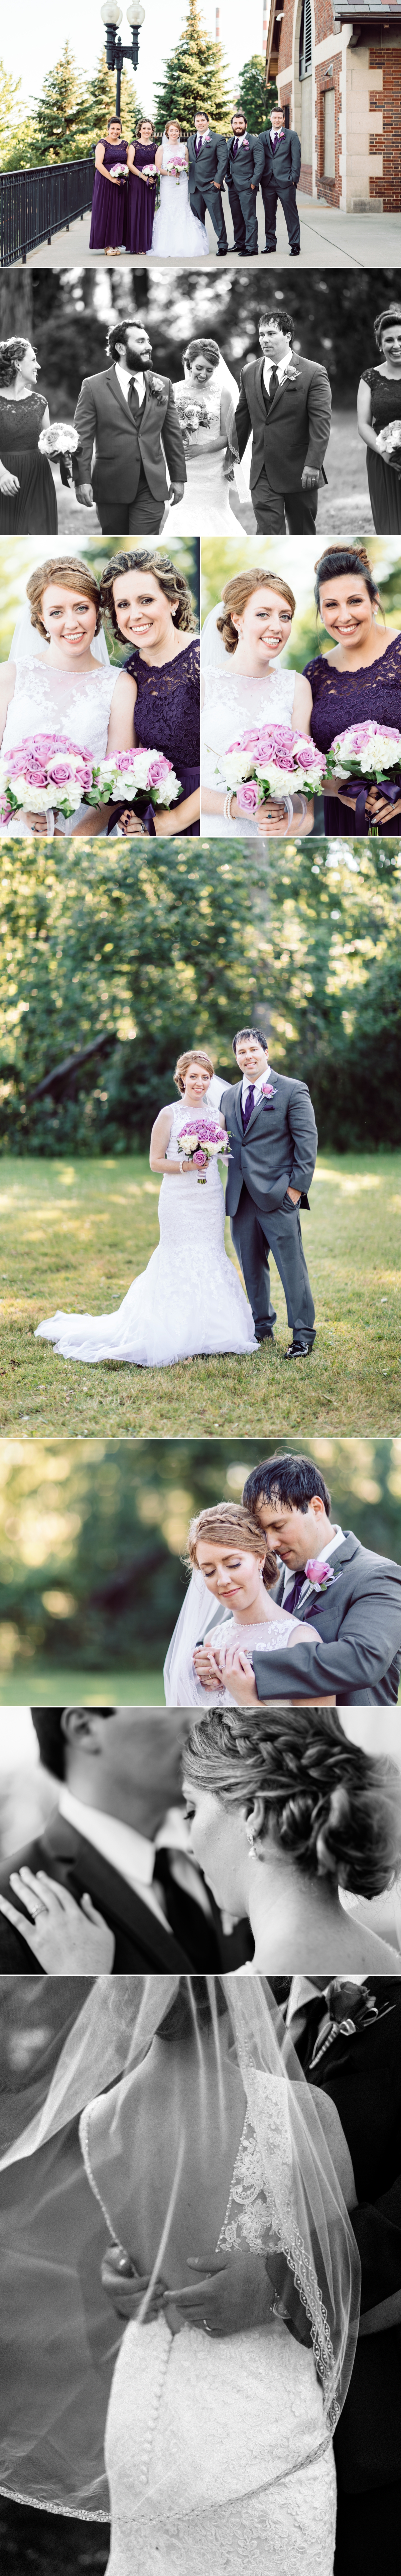 Wedding Party and formal portraits of bride and groom at Elizabeth Park in Trenton, Michigan